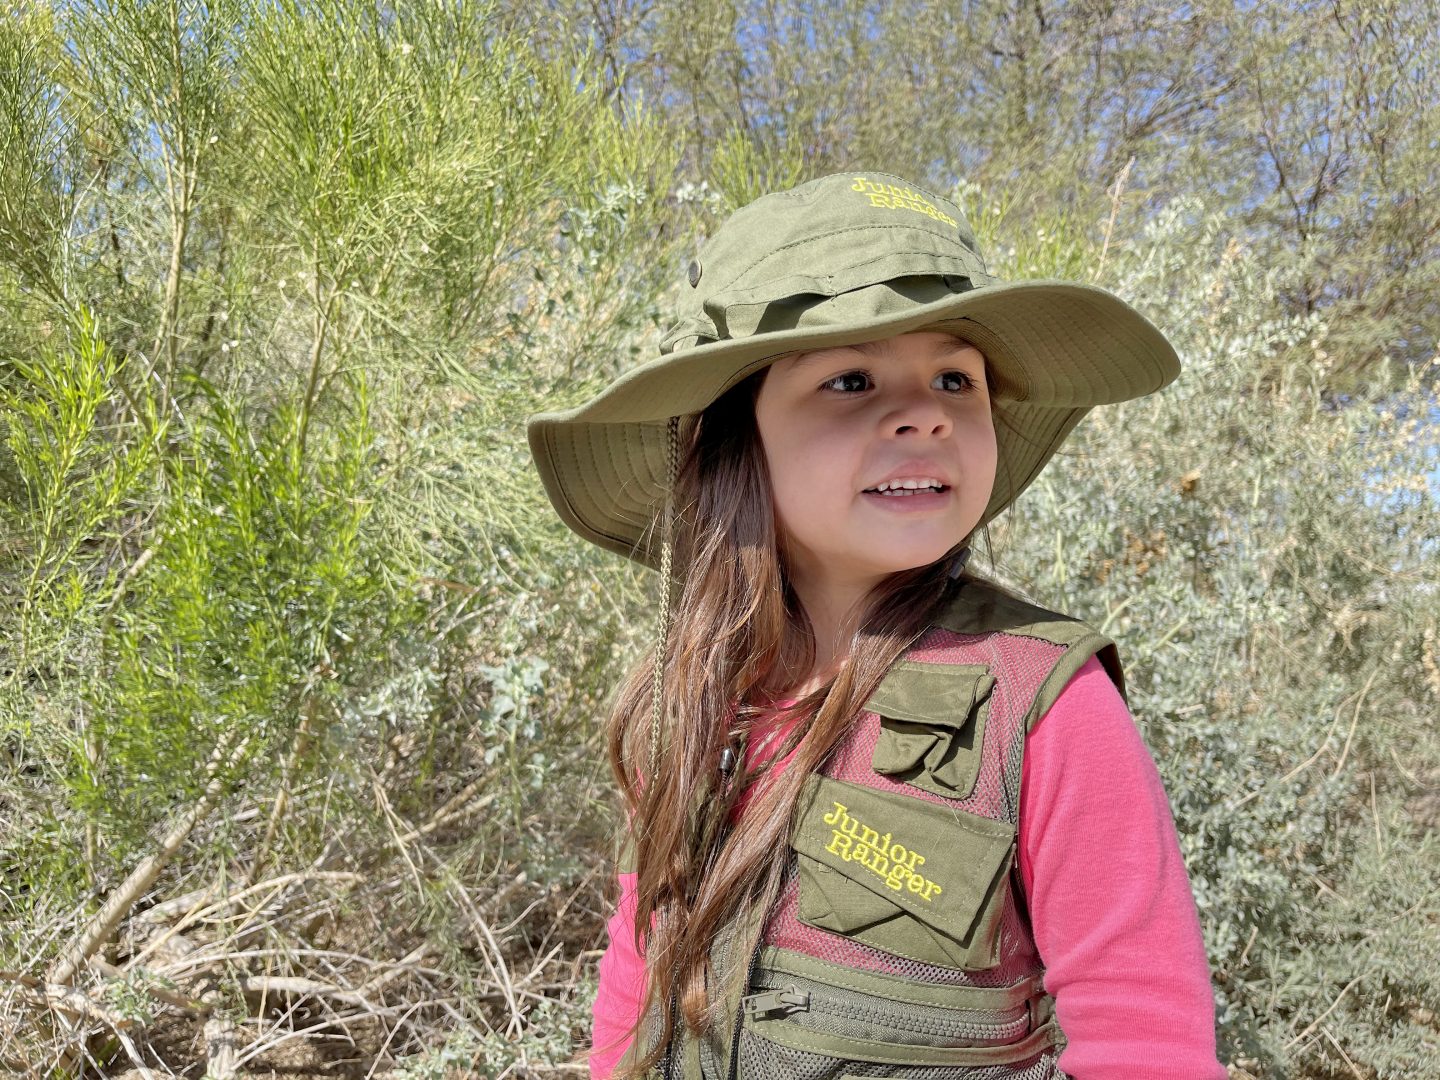 Child in Jr. Ranger gear